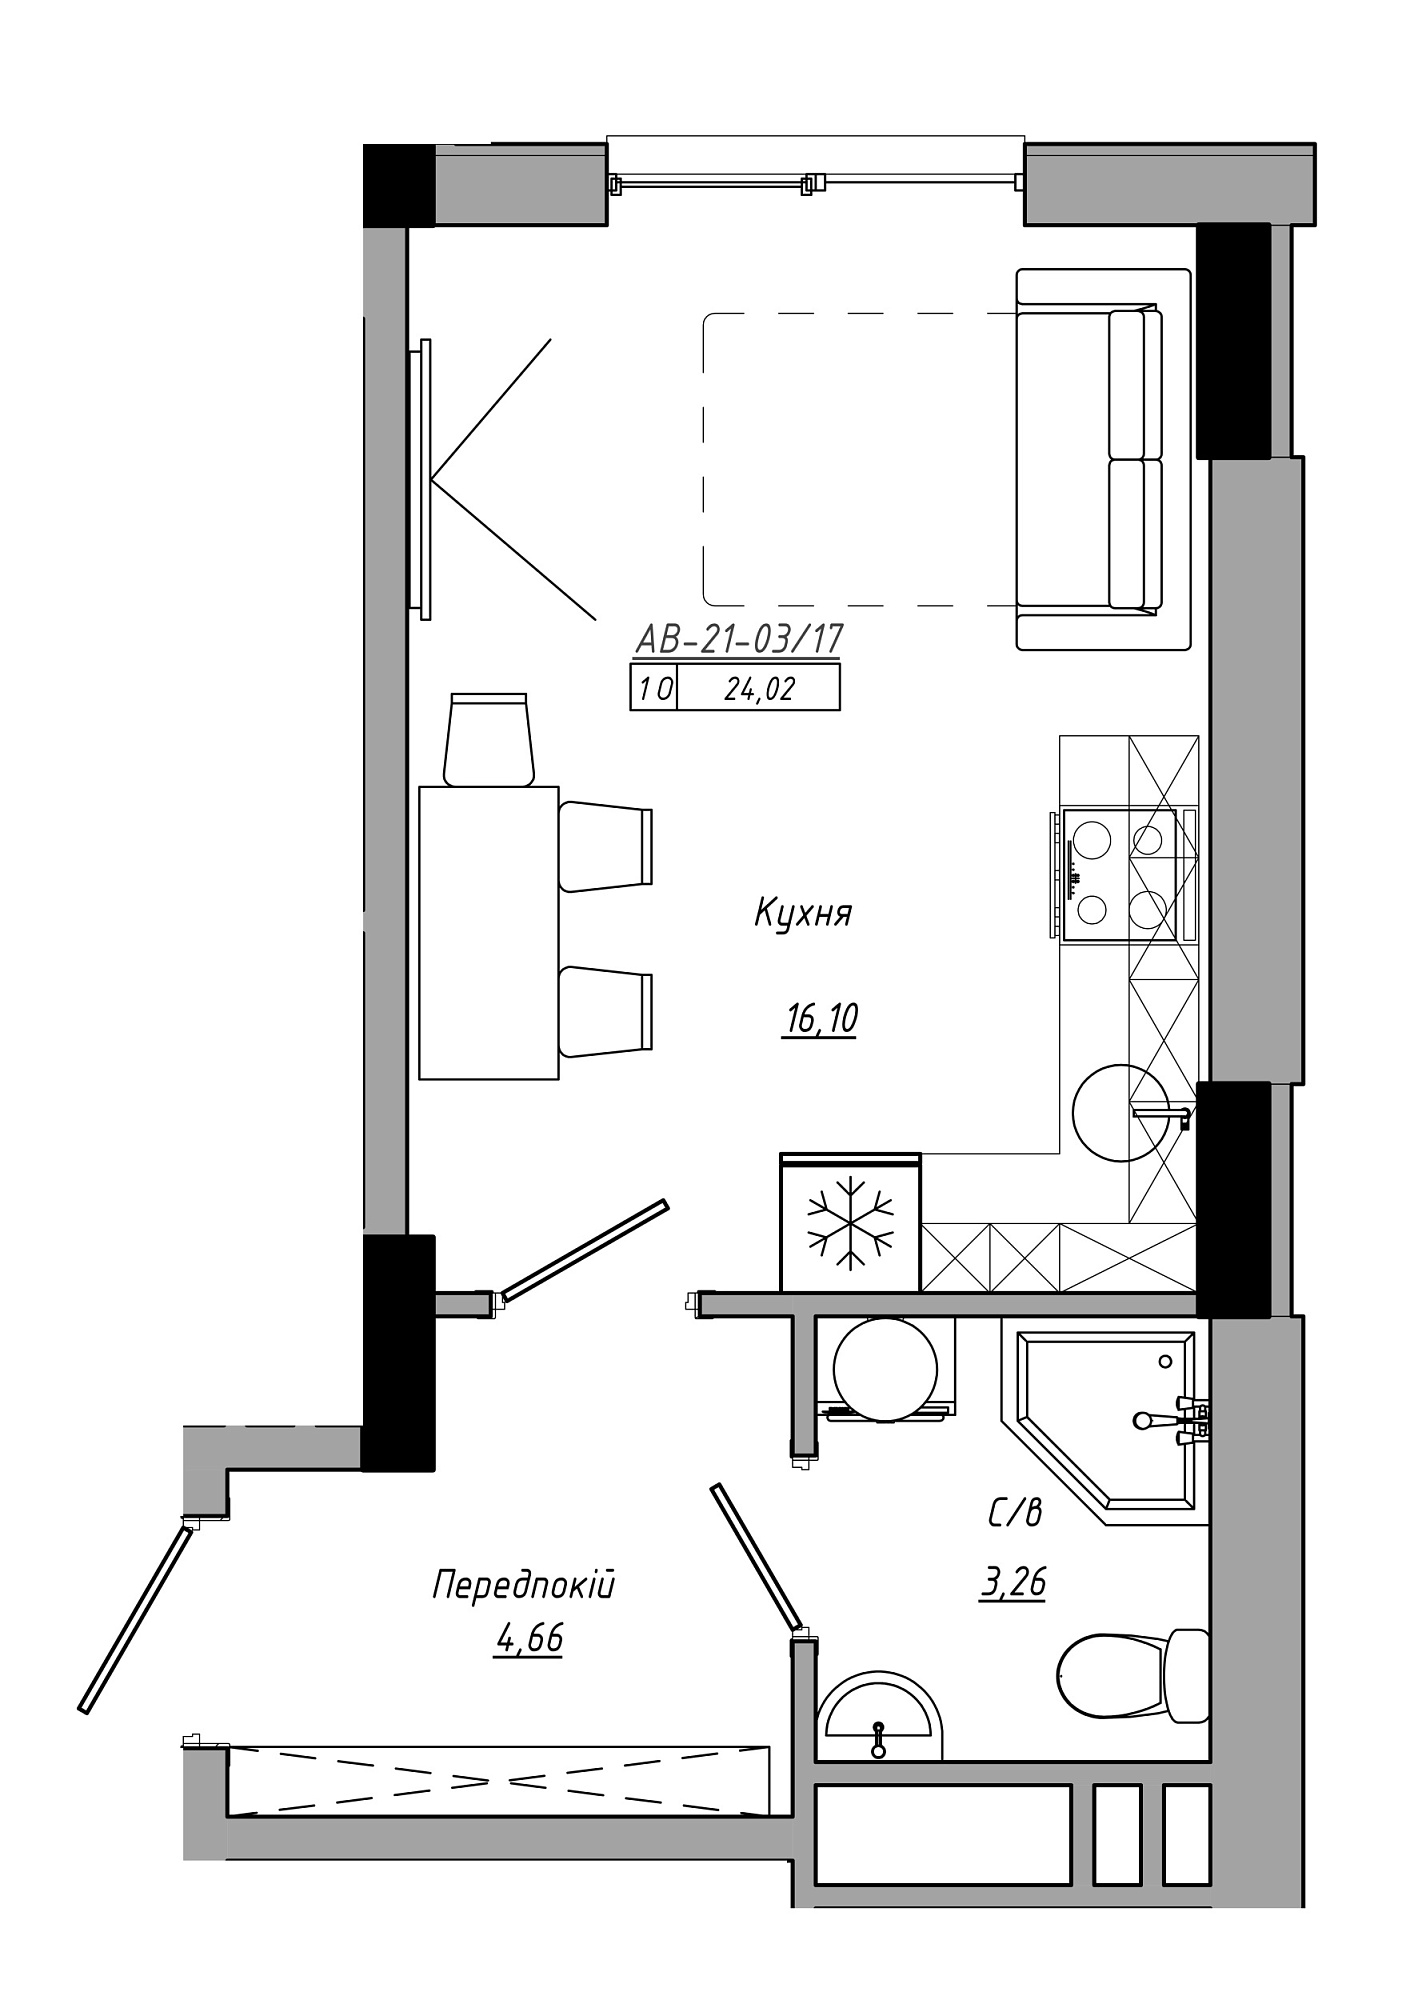 Планировка Smart-квартира площей 24.02м2, AB-21-03/00017.